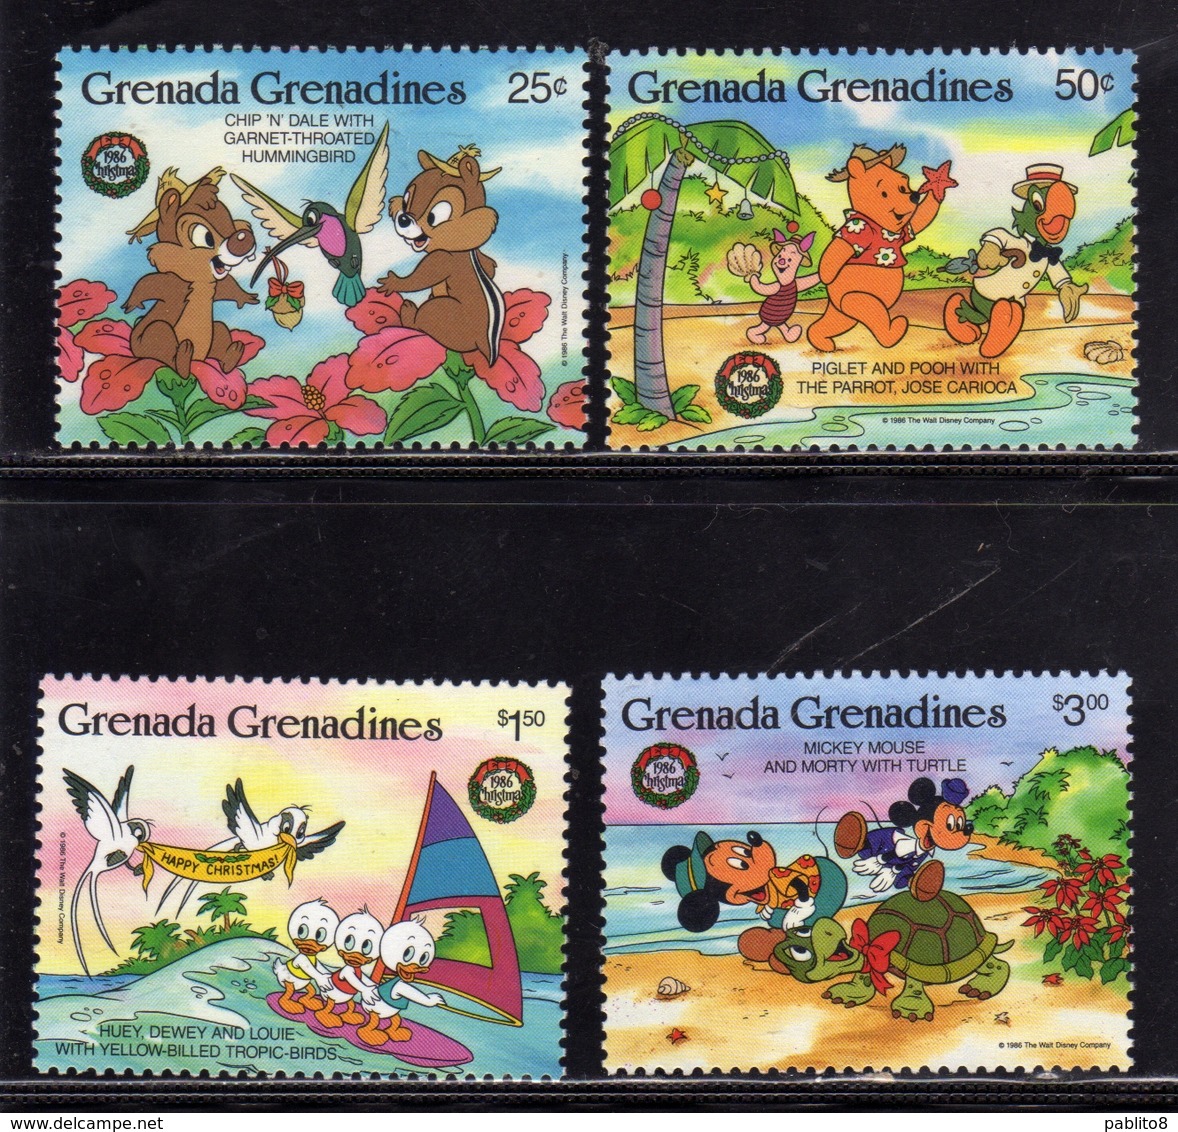 GRENADA GRENADINES 1986 WALT DISNEY CHRISTMAS GREETINGS AUGURI DI NATALE COMPLETE SET SERIE COMPLETA MNH - Grenada (1974-...)